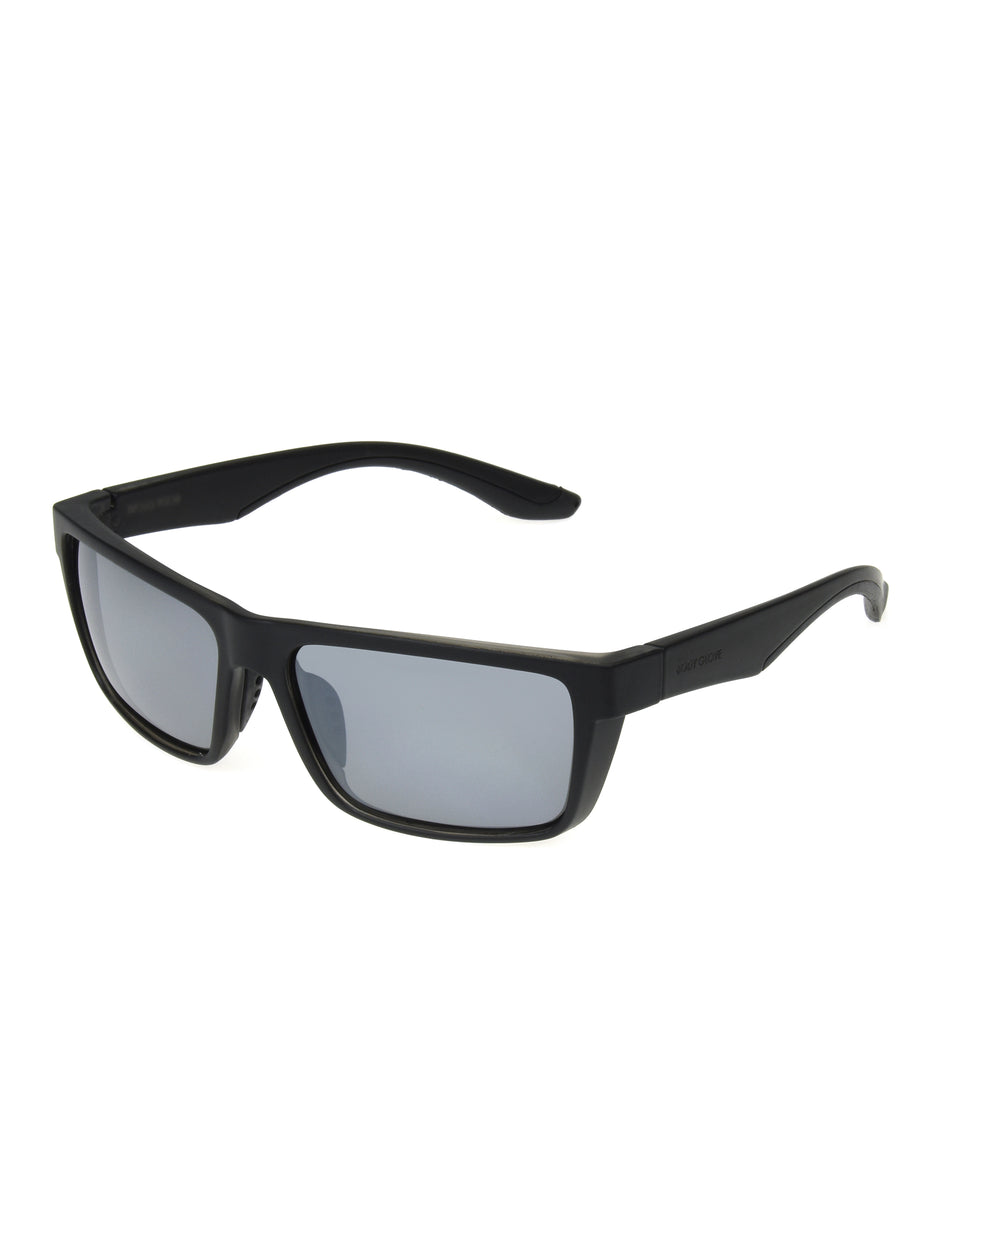 Men's Vapor 2002 Sunglasses - Grey/Black